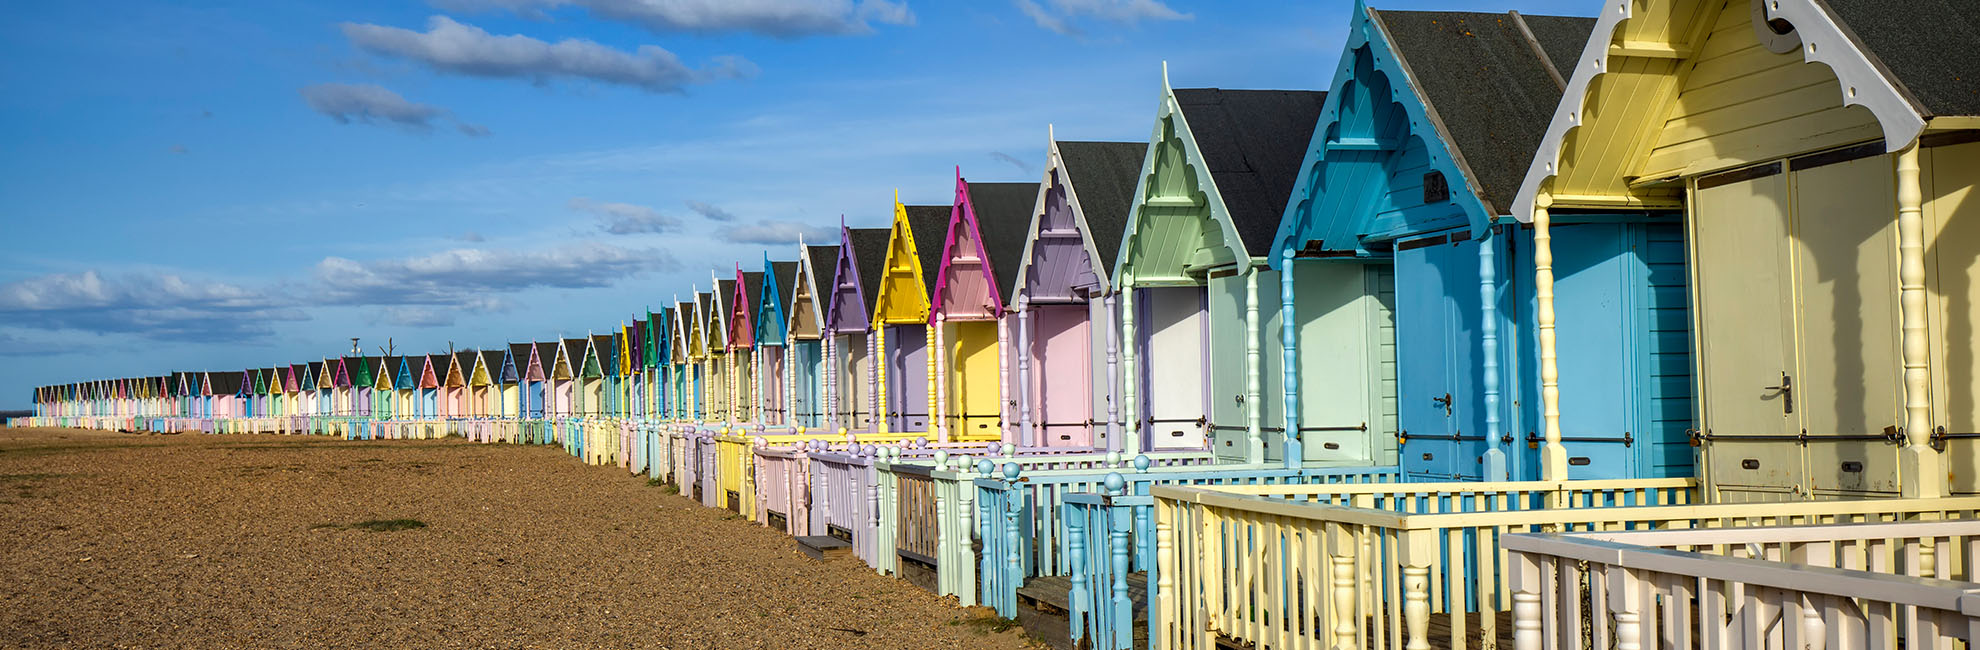 Colourful beach huts on Mersea Island in Essex